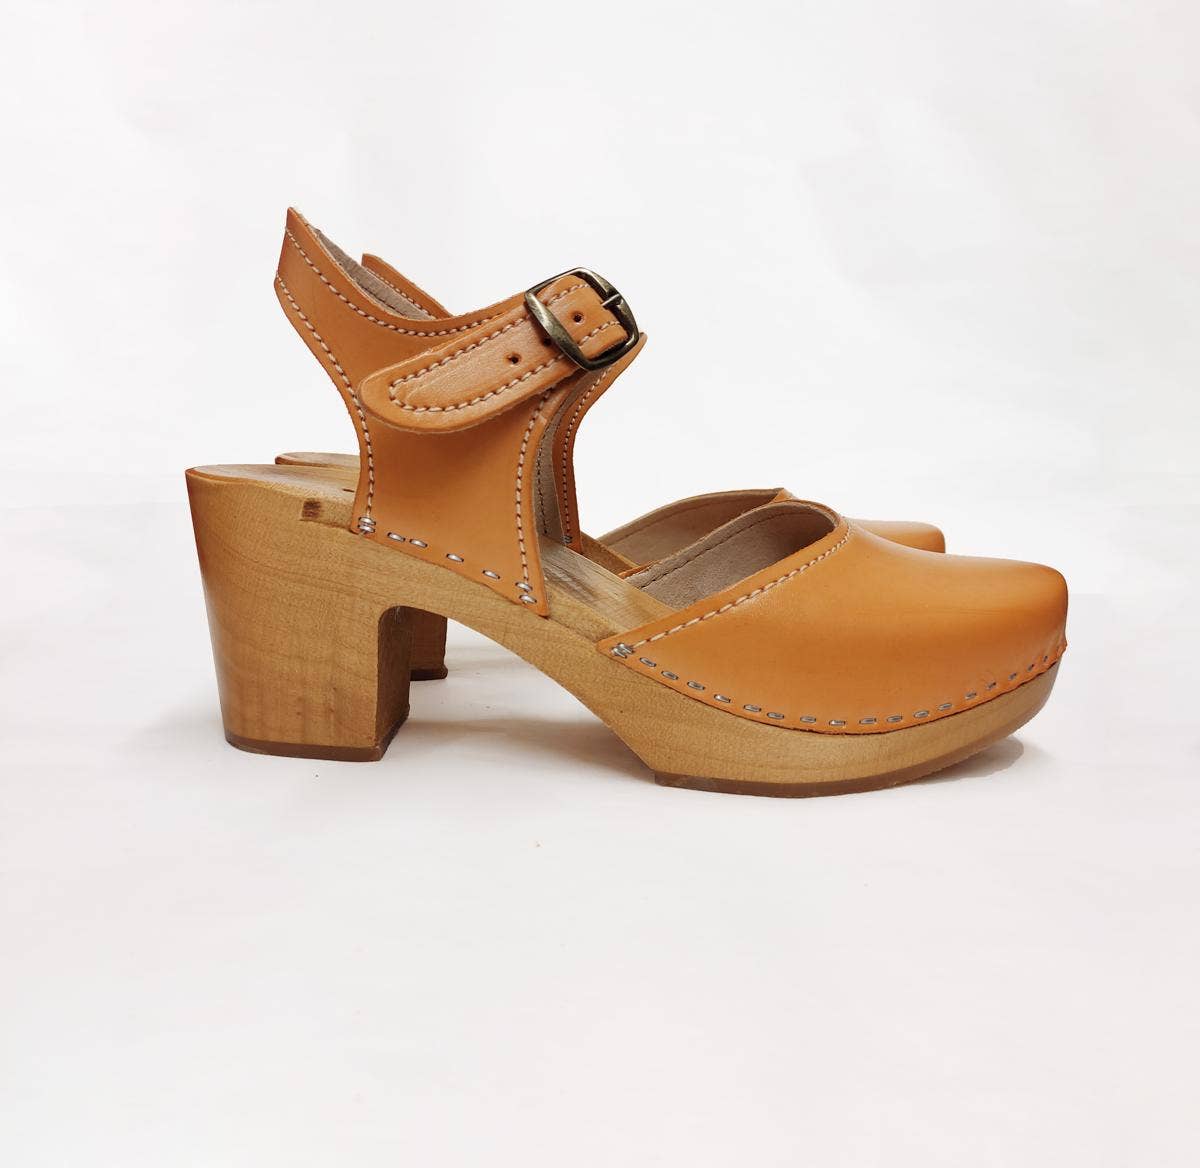 BJORK MARGARETA Swedish Wood Clog Sandals in Oiled Leather - Walmart.com